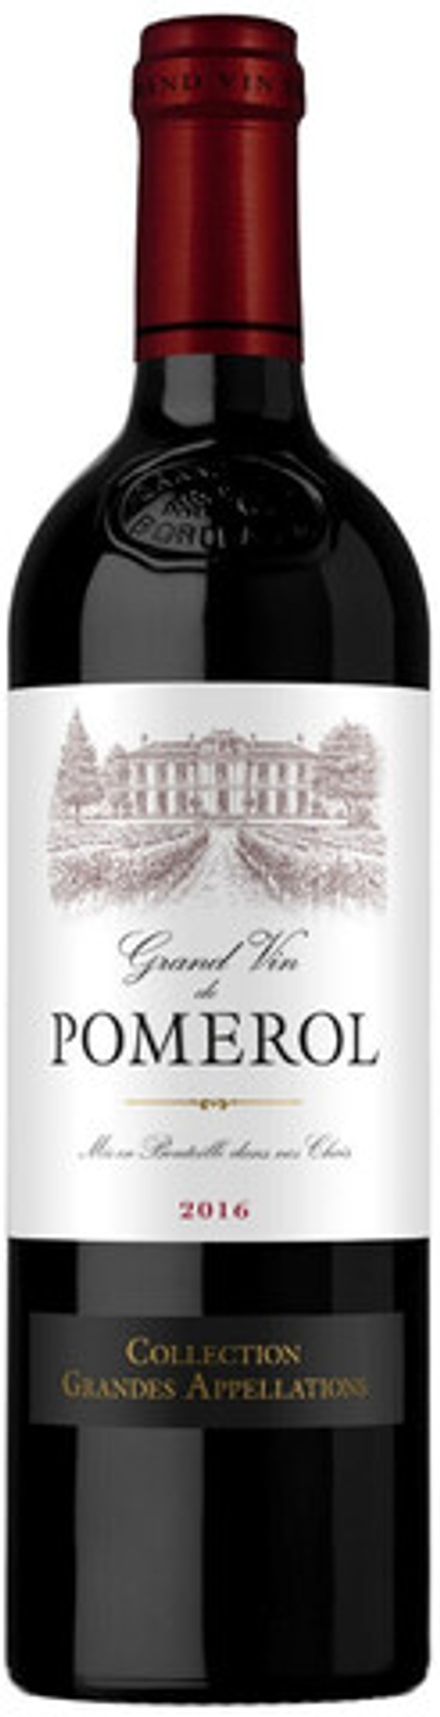 Вино Maison Ginestet Grand Vin de Pomerol, 0,75 л.